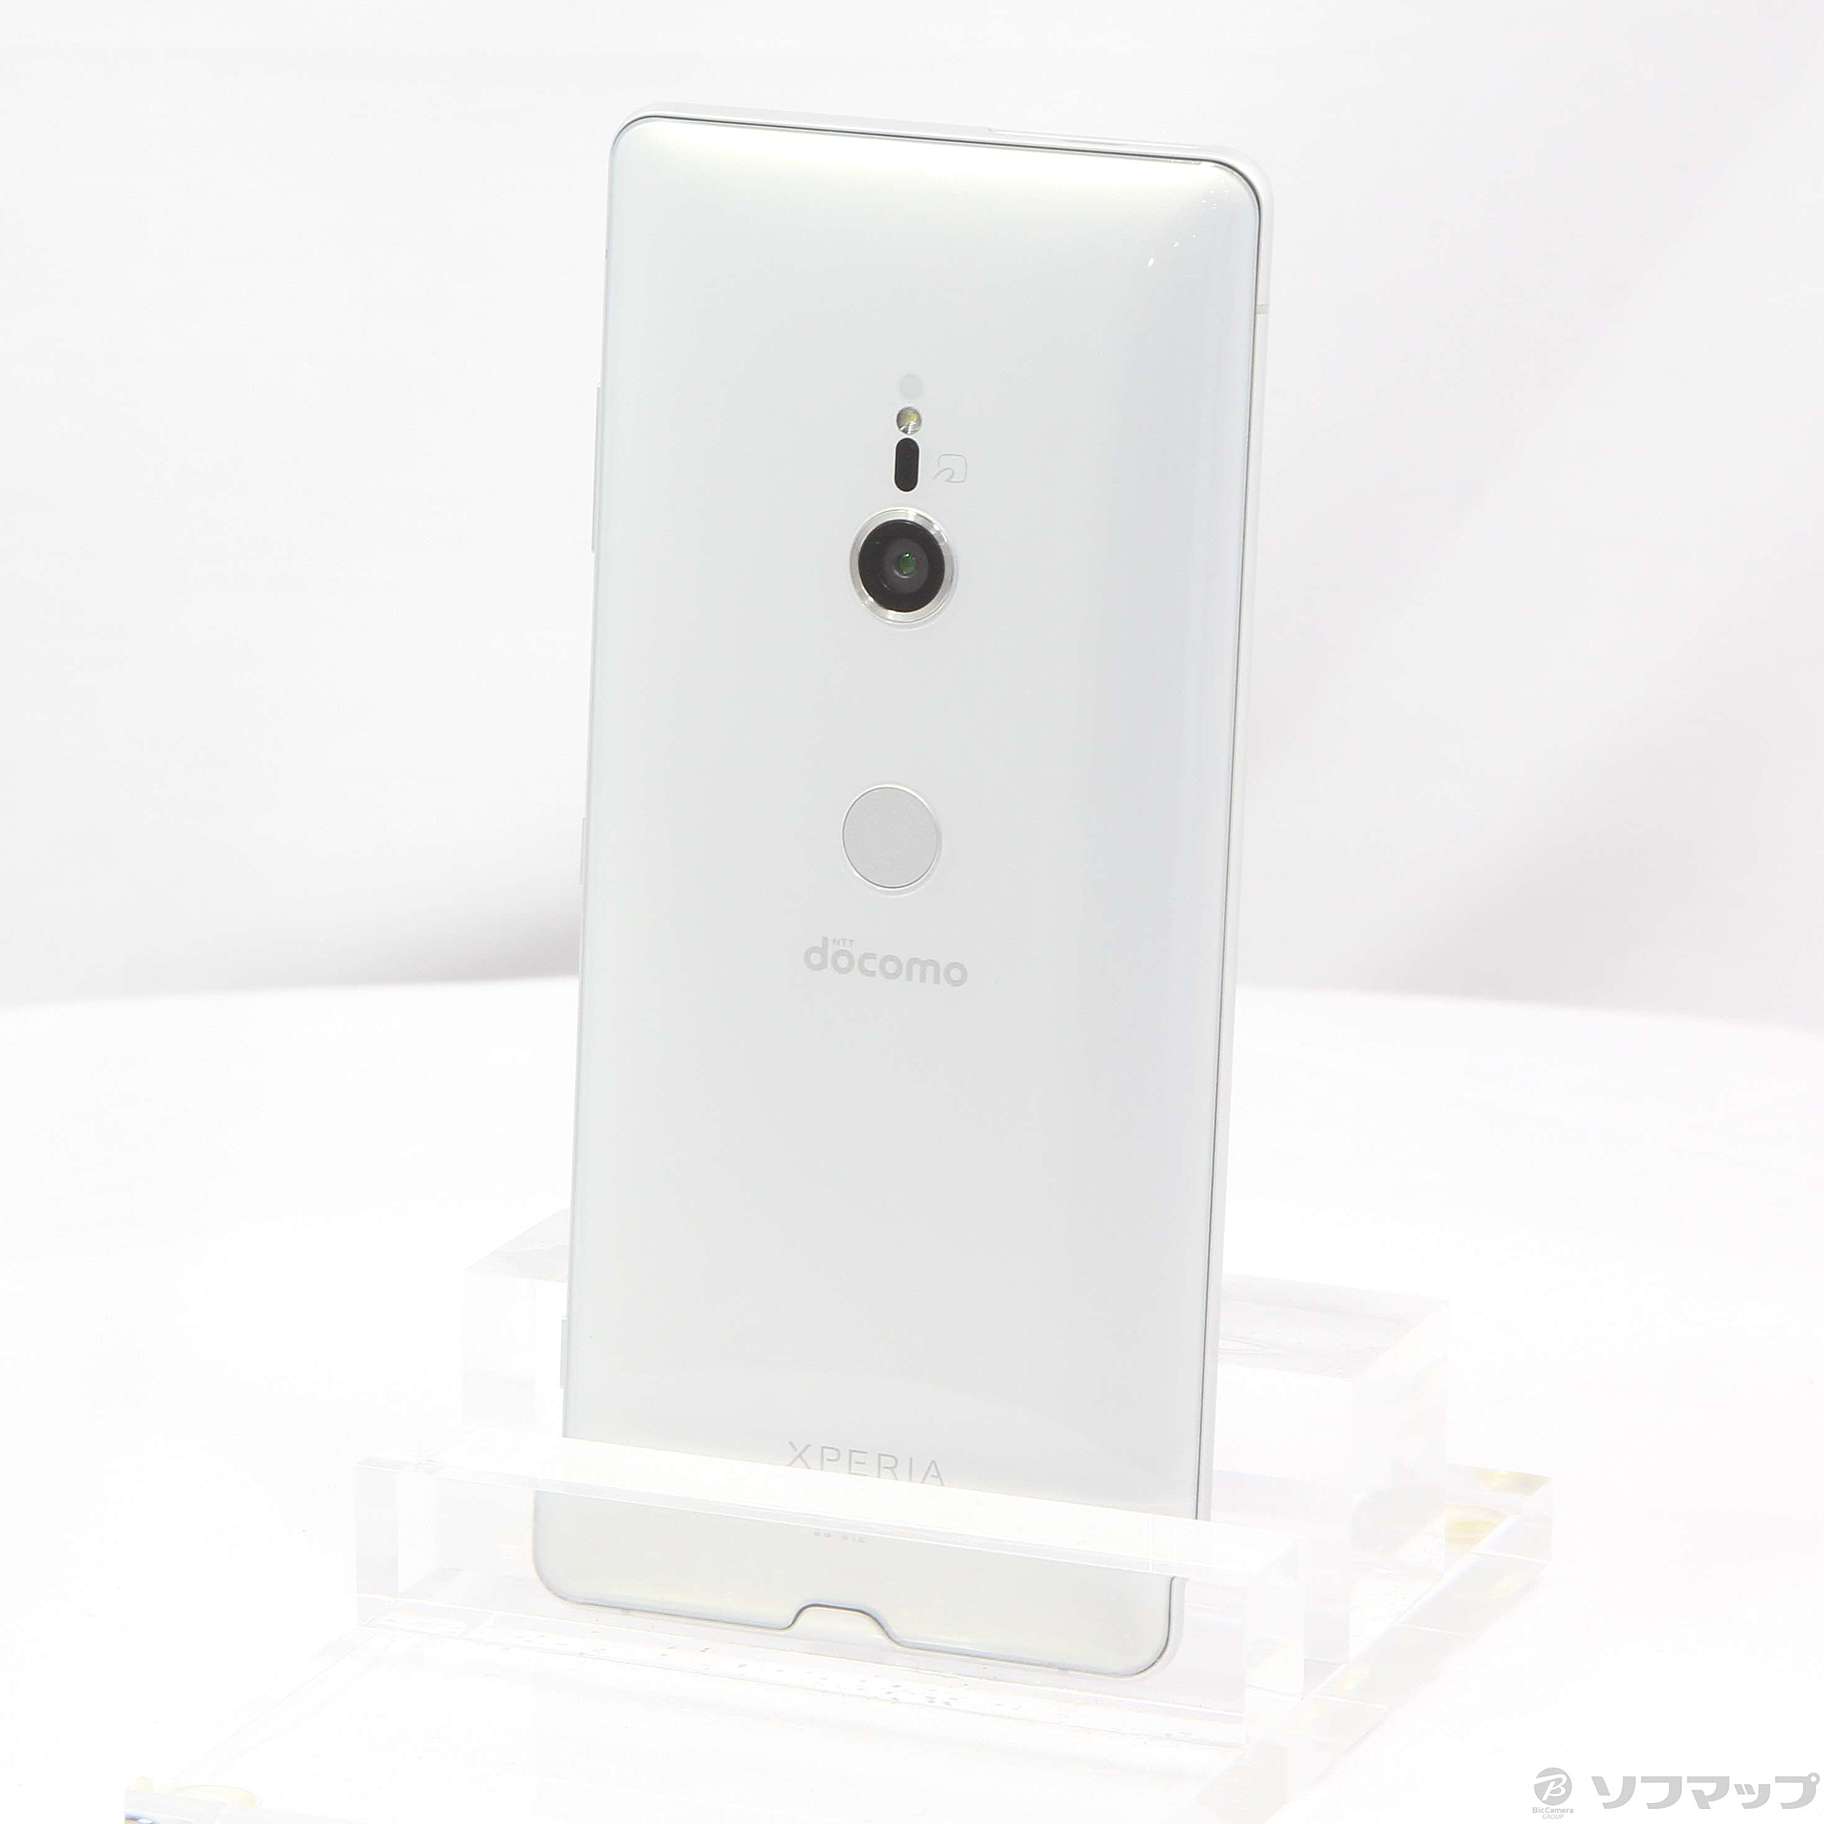 Xperia XZ3 White Silver 64 GB docomo